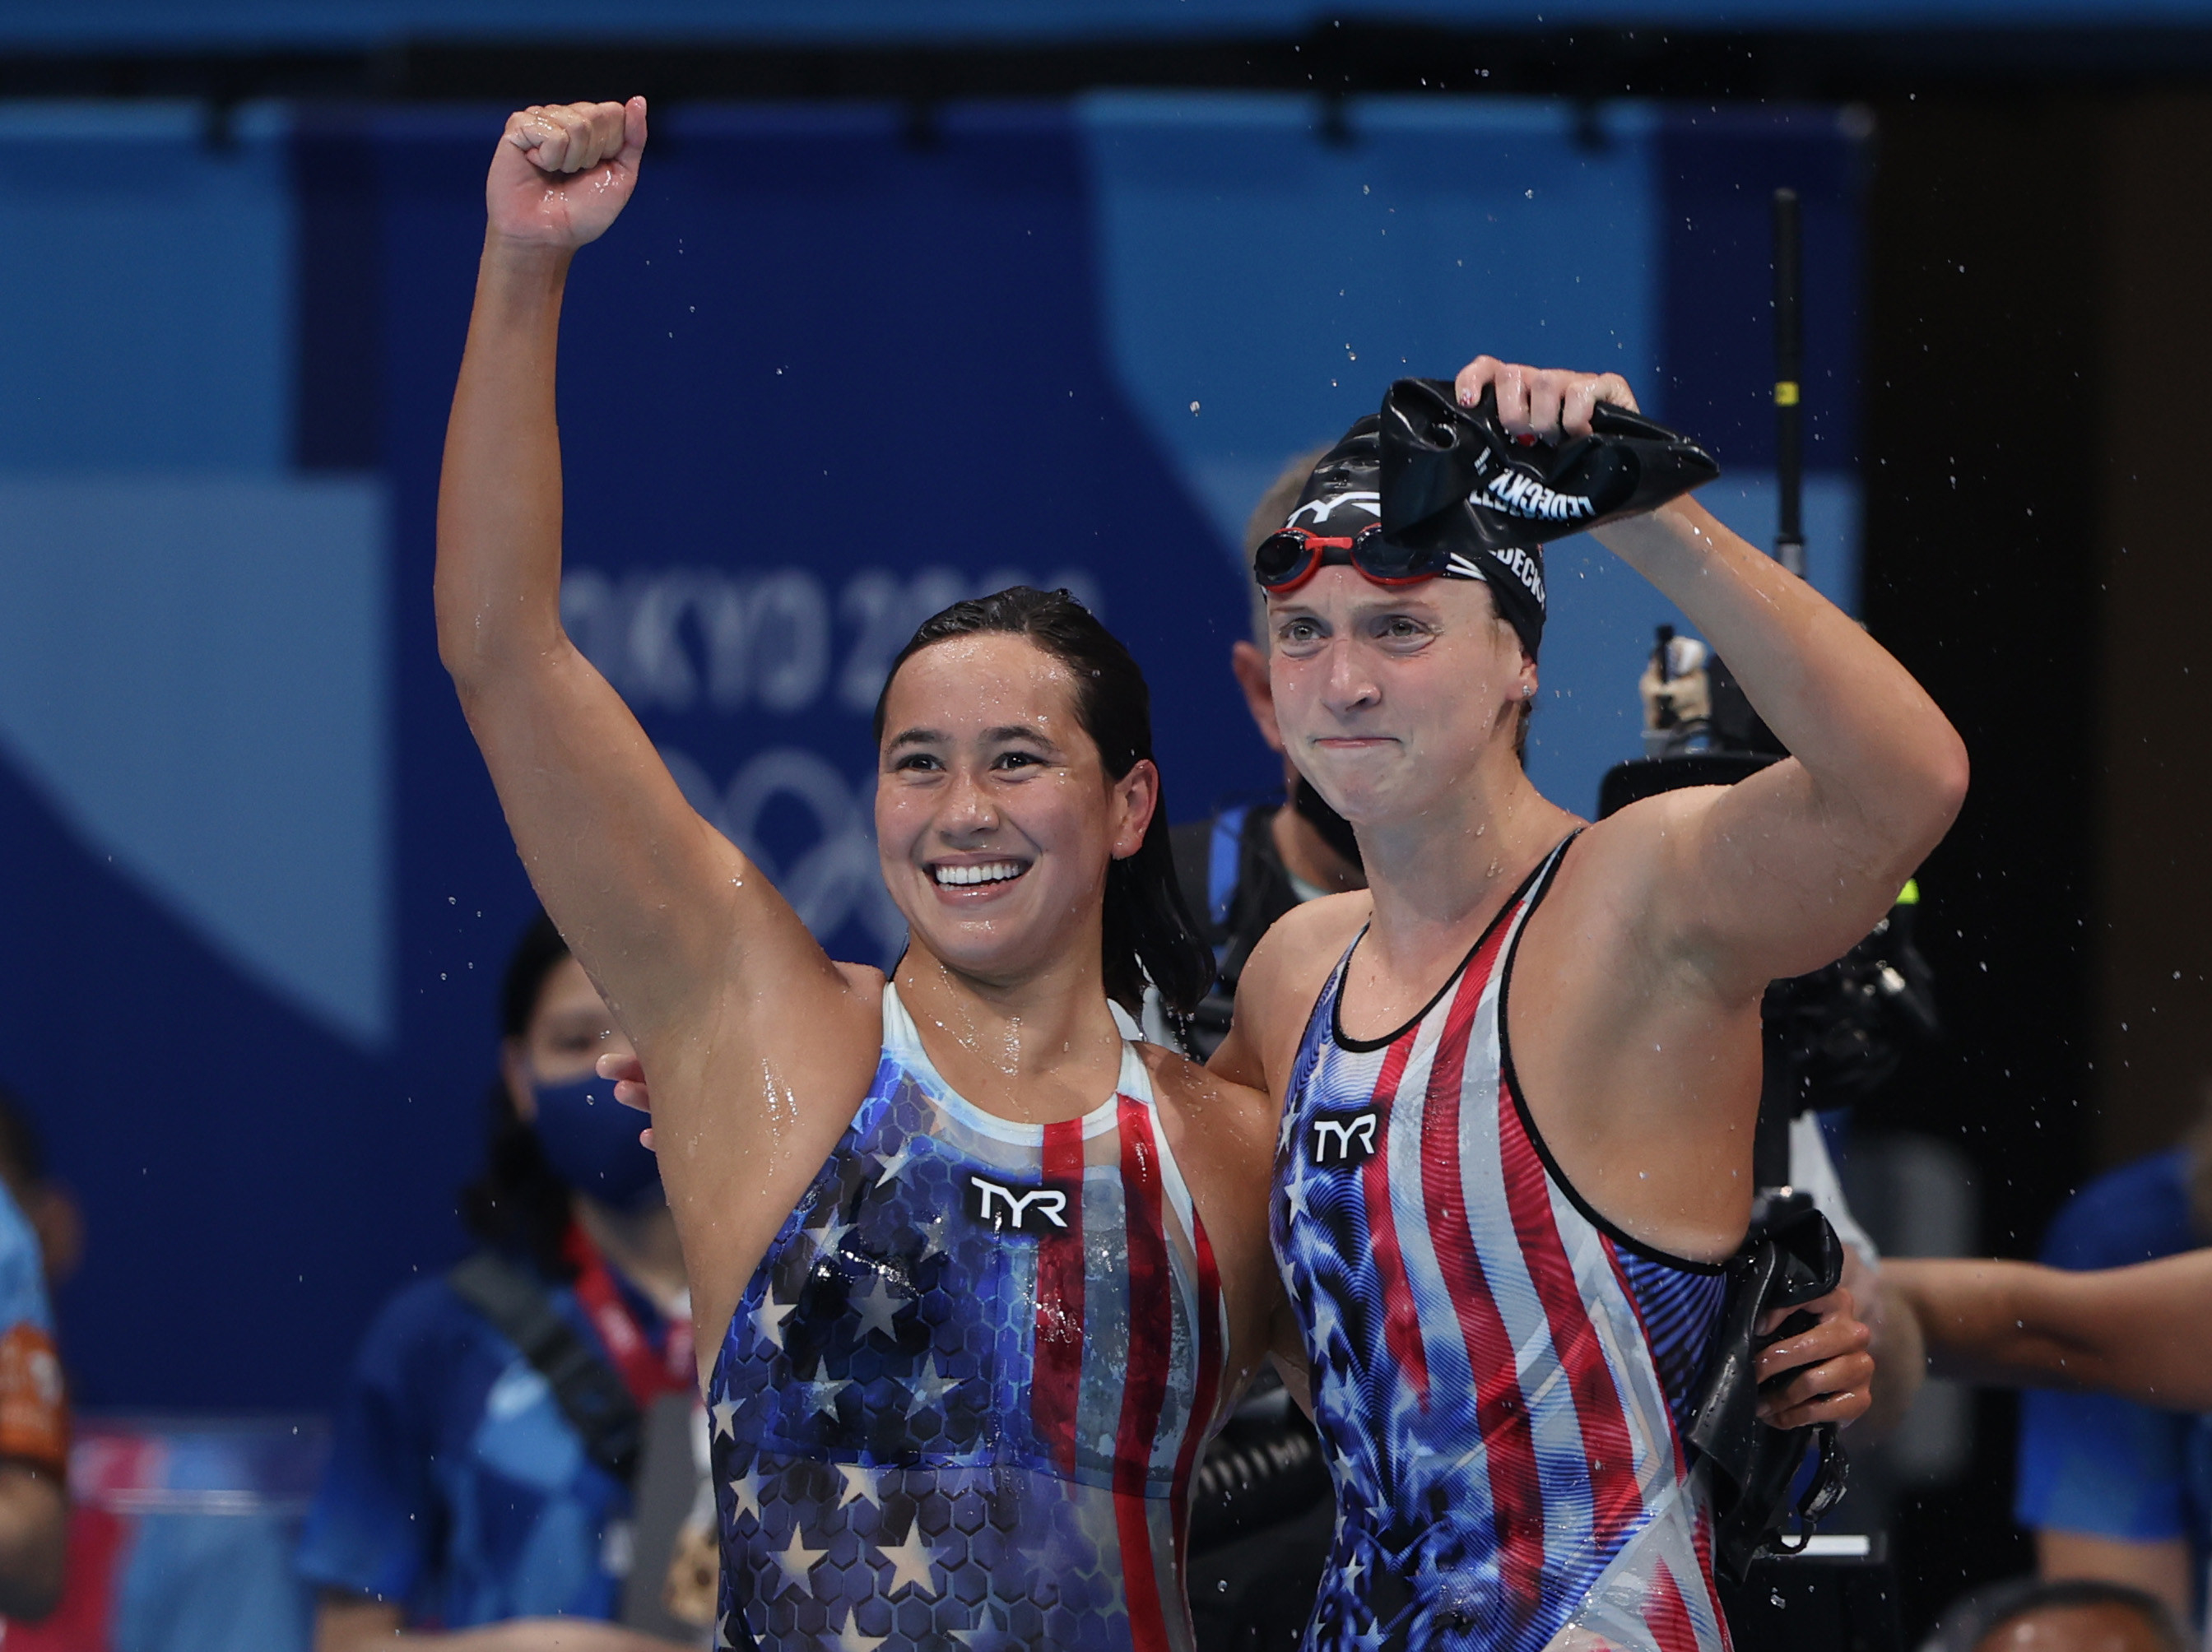 Erica celebrating with fellow swimmer Katie Ledecky